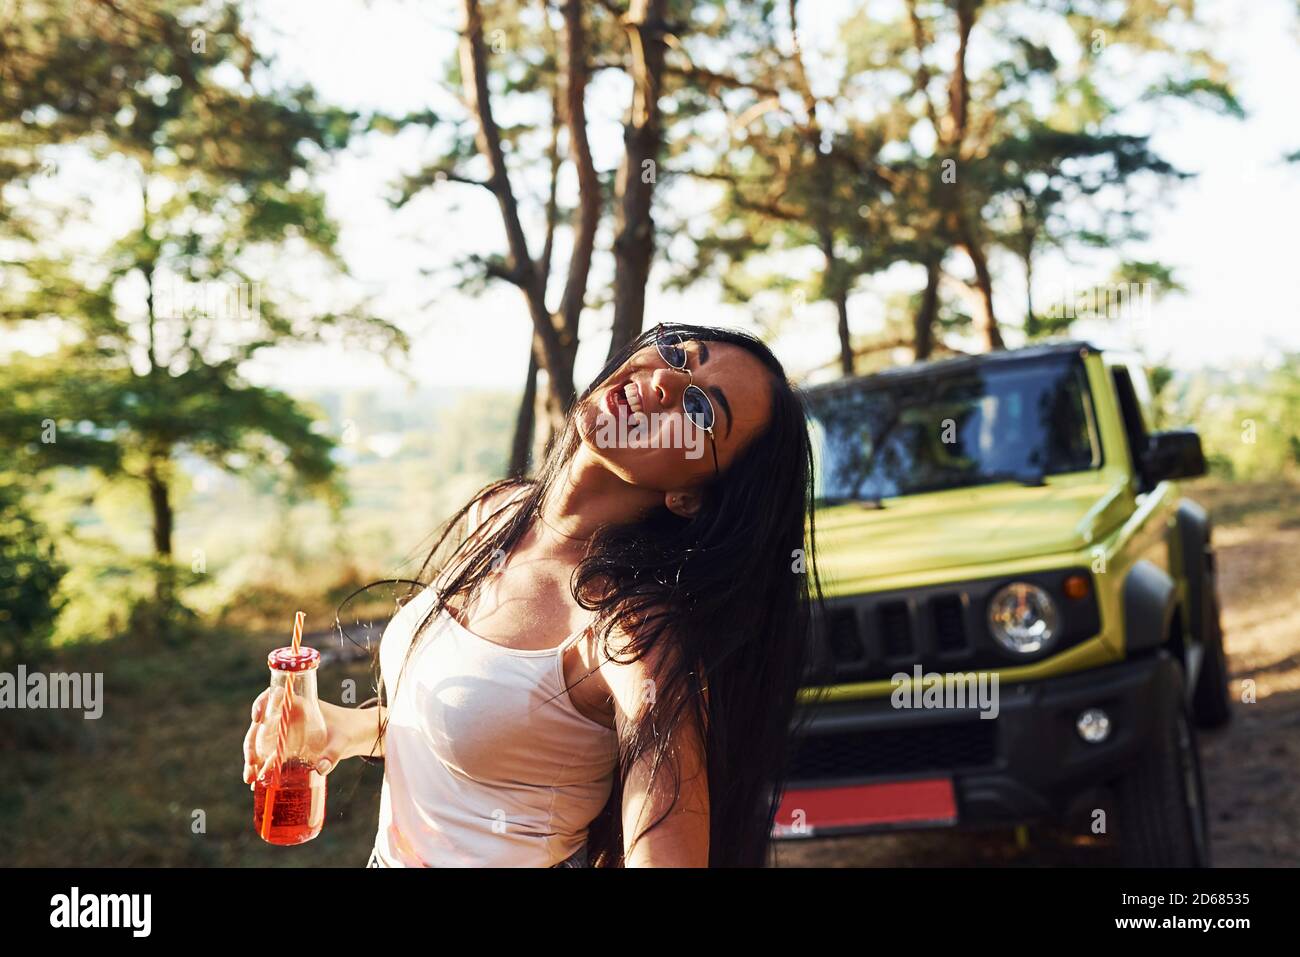 Hot Girl Posing Next To Retro Car Stock Image - Image of beauty, pick:  43468451